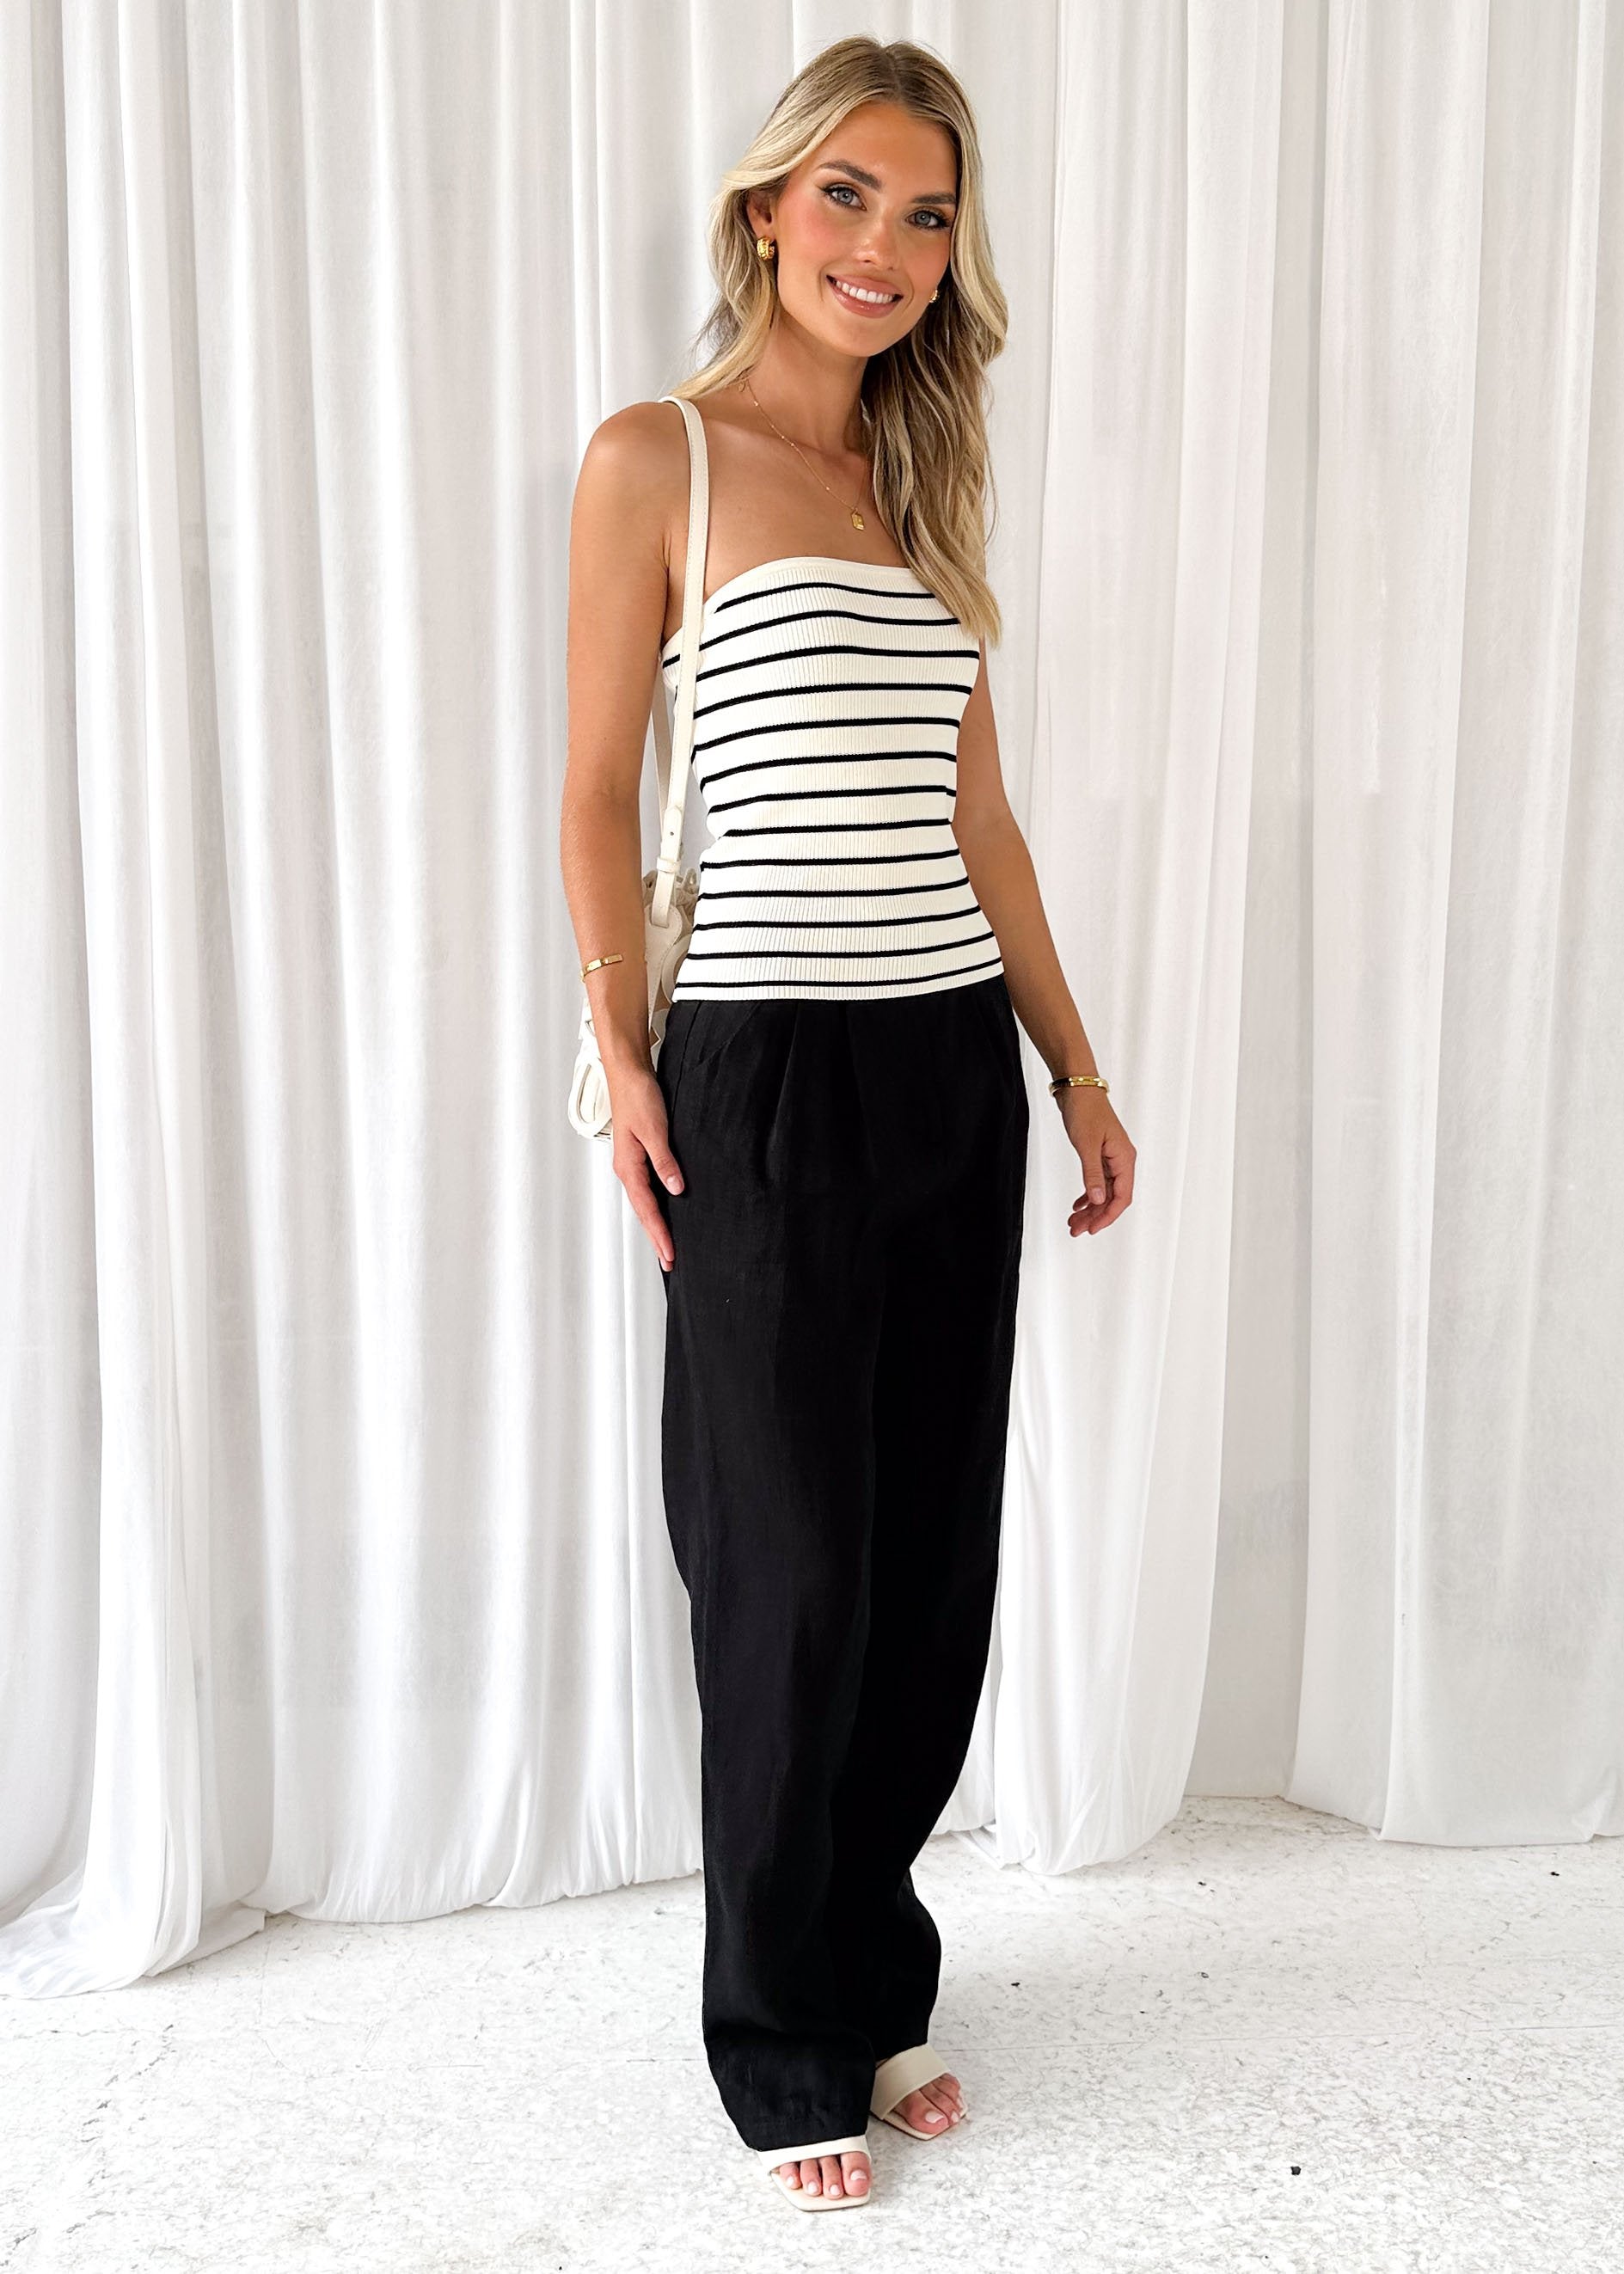 Zailo Strapless Knit Top - White Stripe